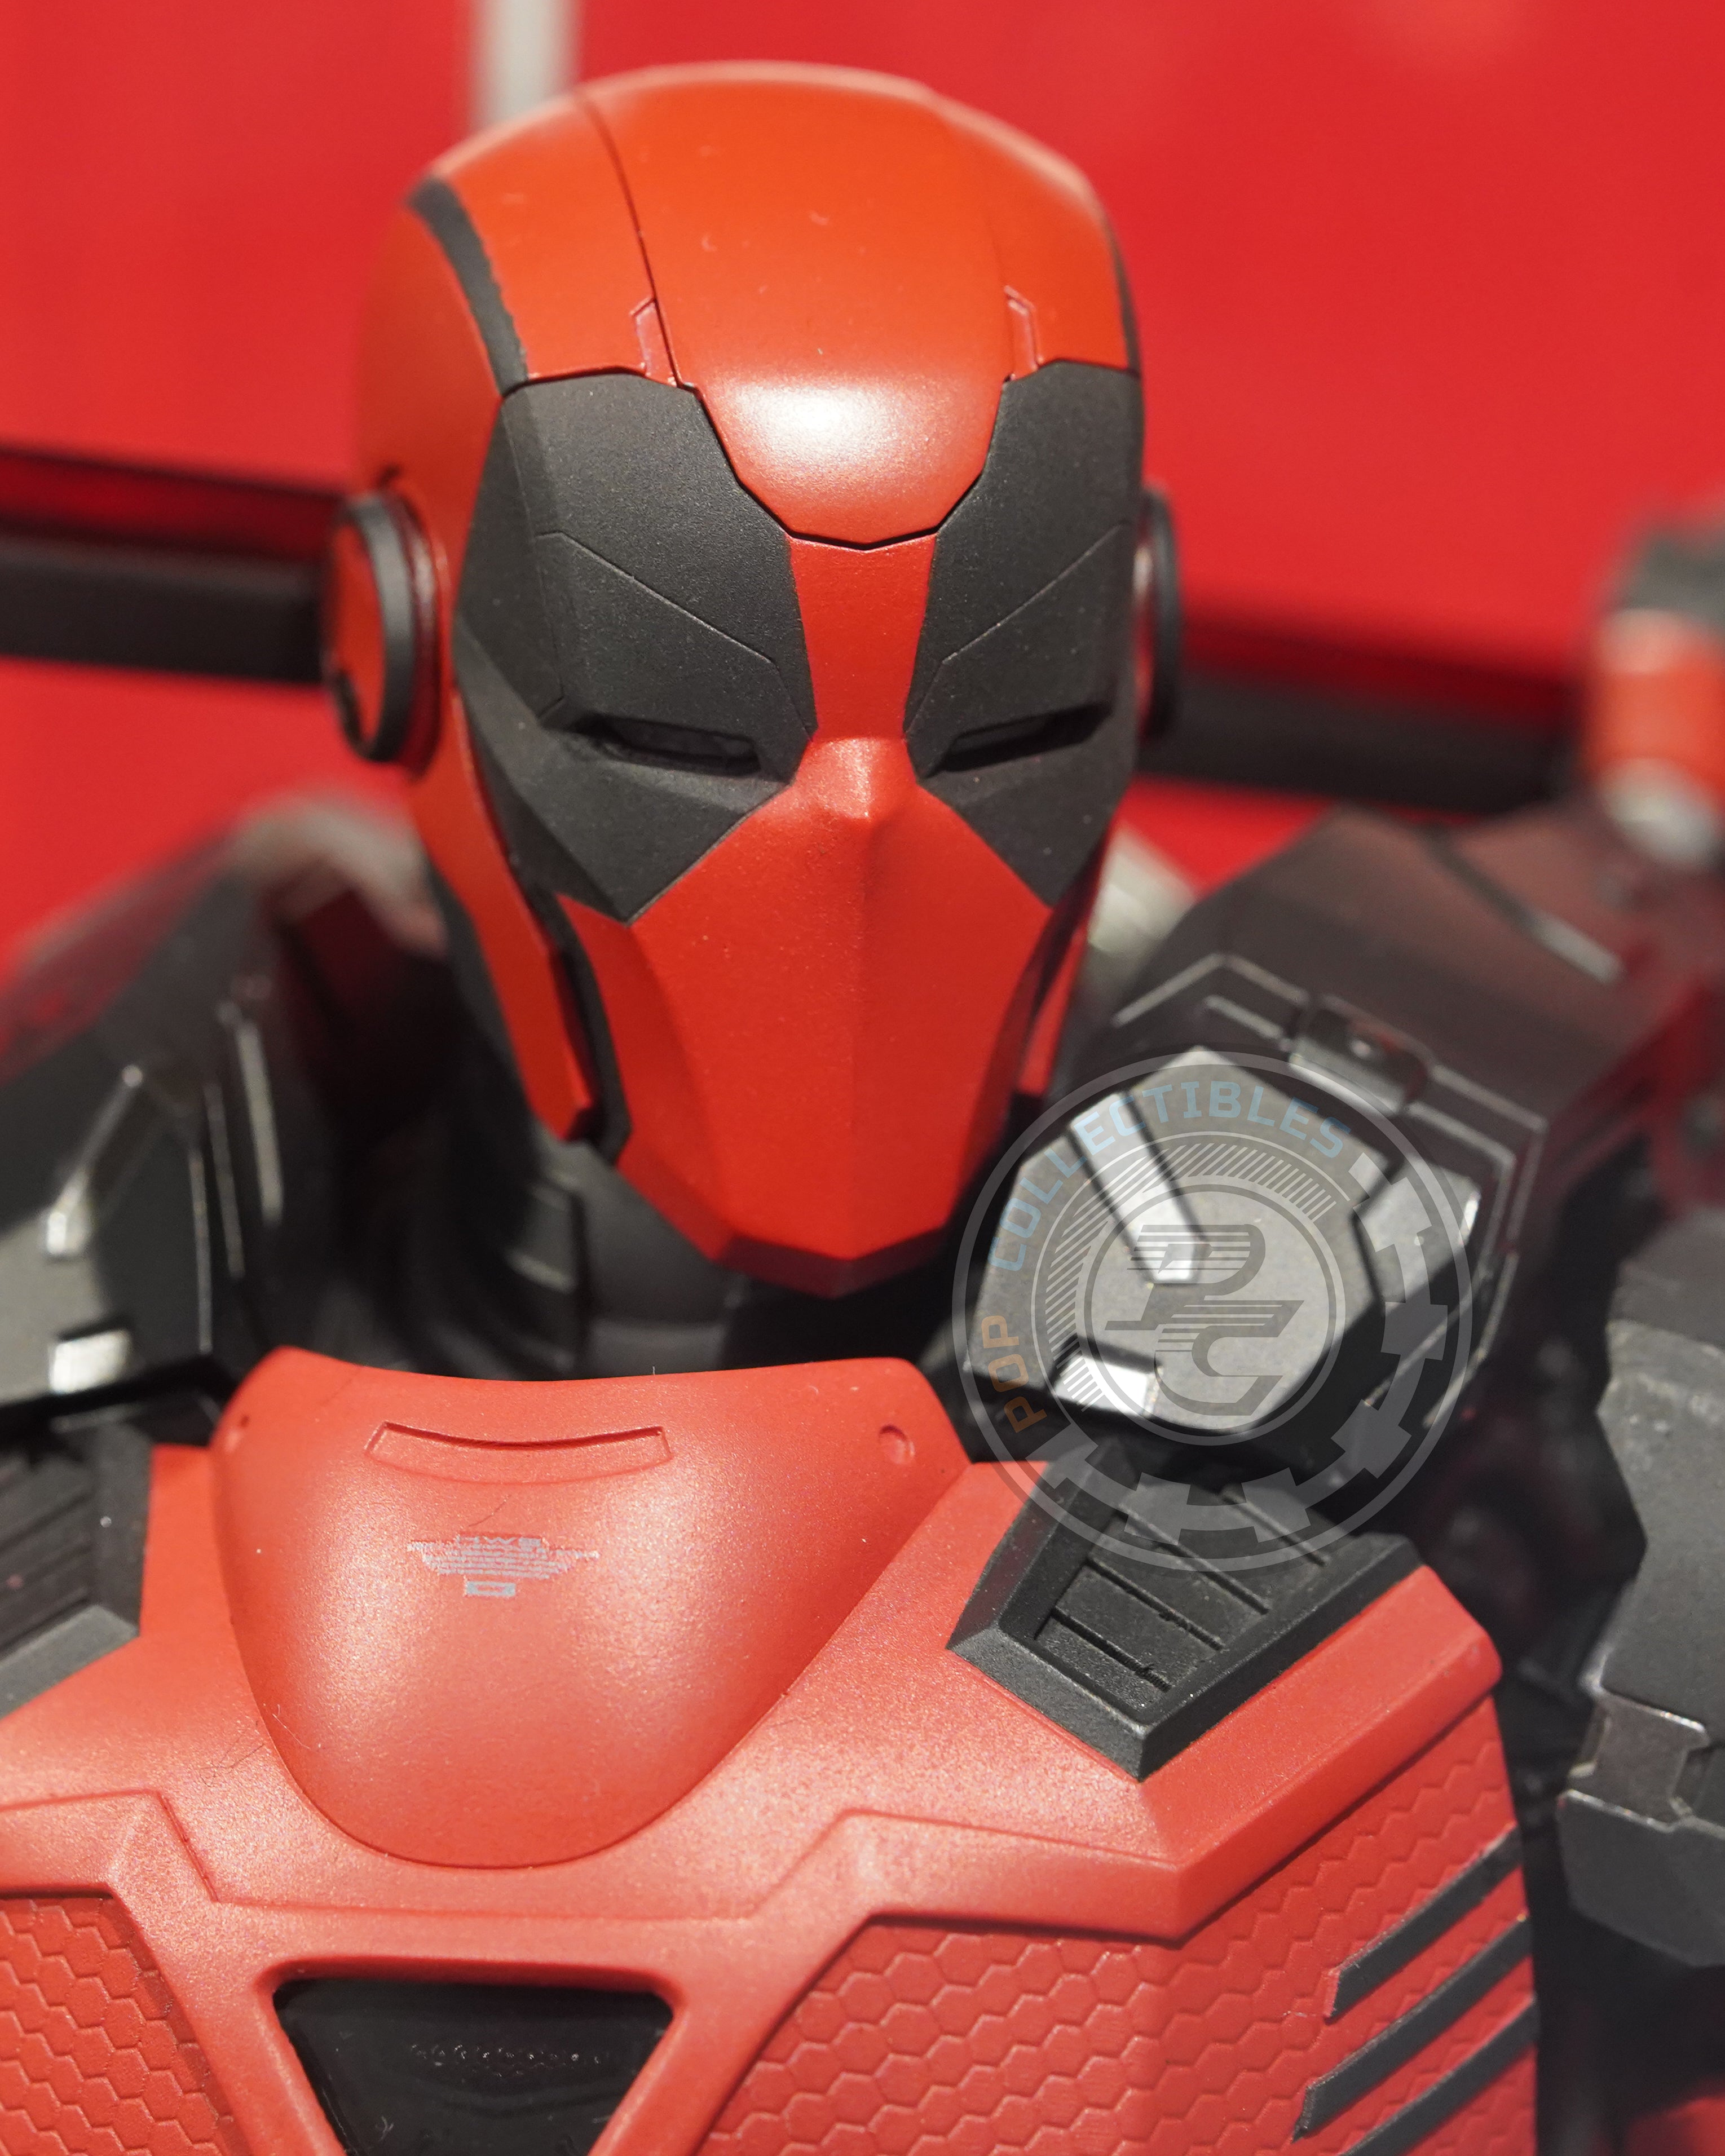 Hot Toys Armorized Deadpool Marvel Figure Unboxing